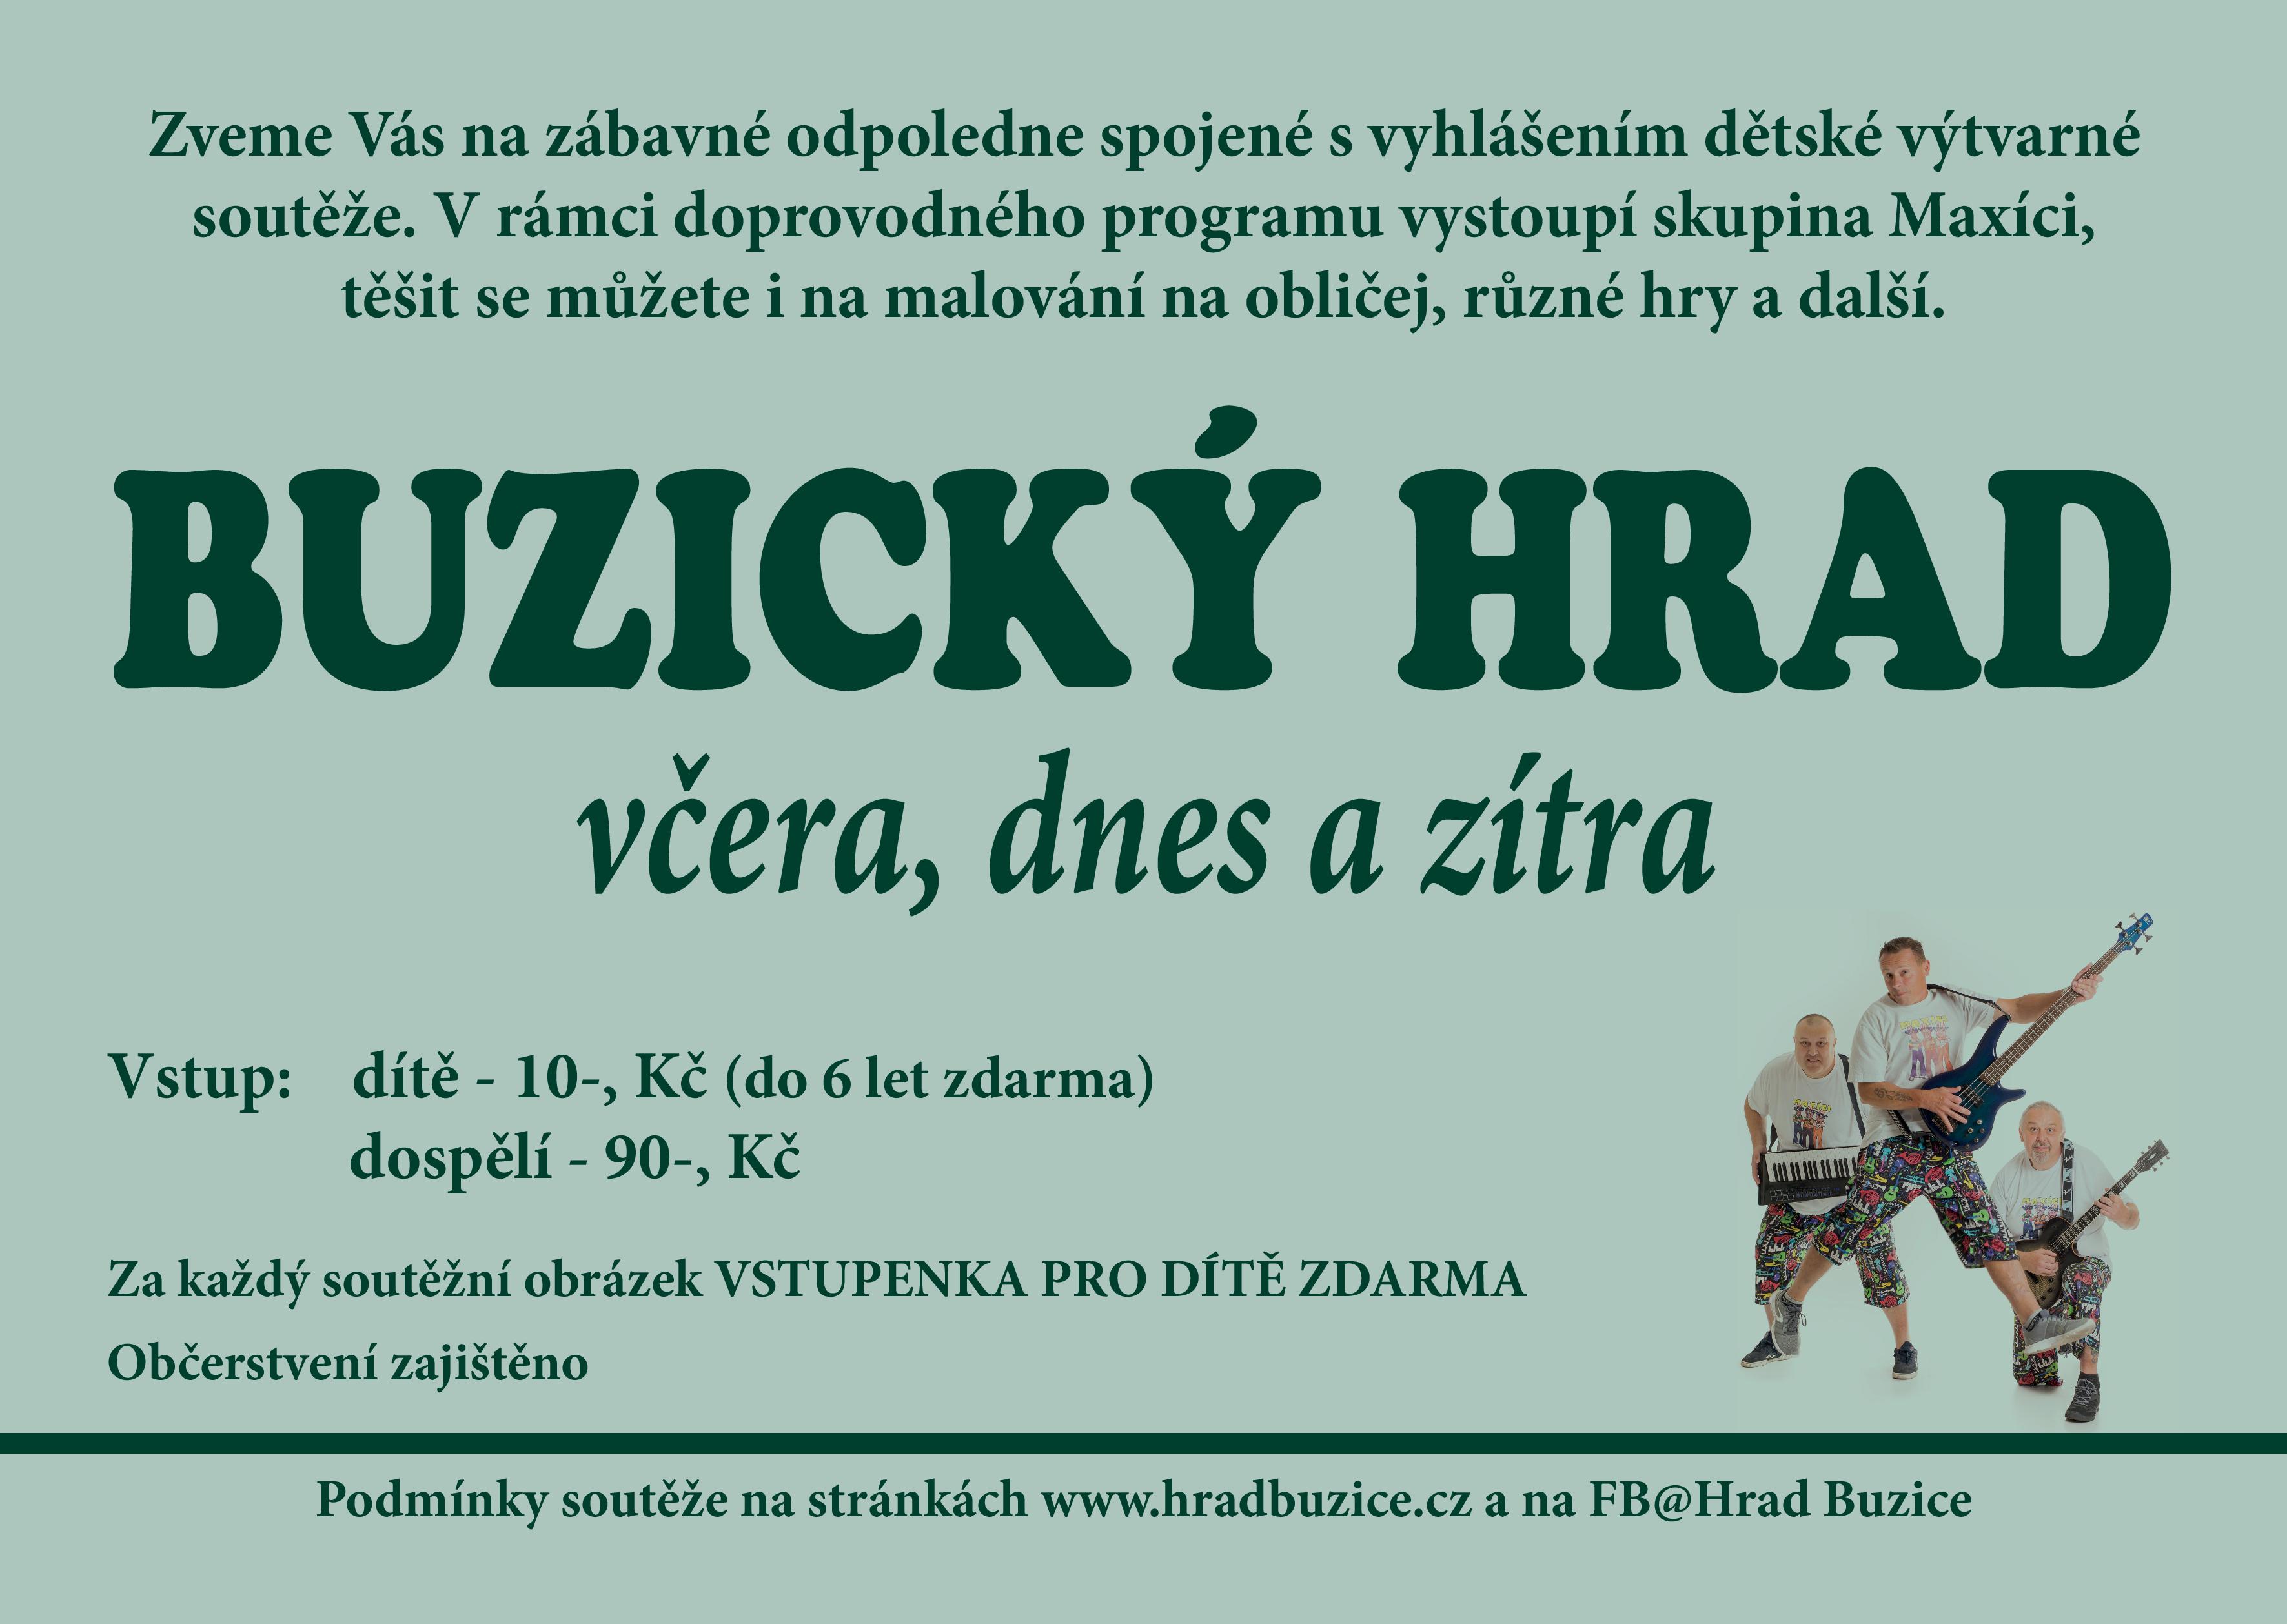 Buzicky hrad_vcera-dnes-zitra_A2 (2)-page-001